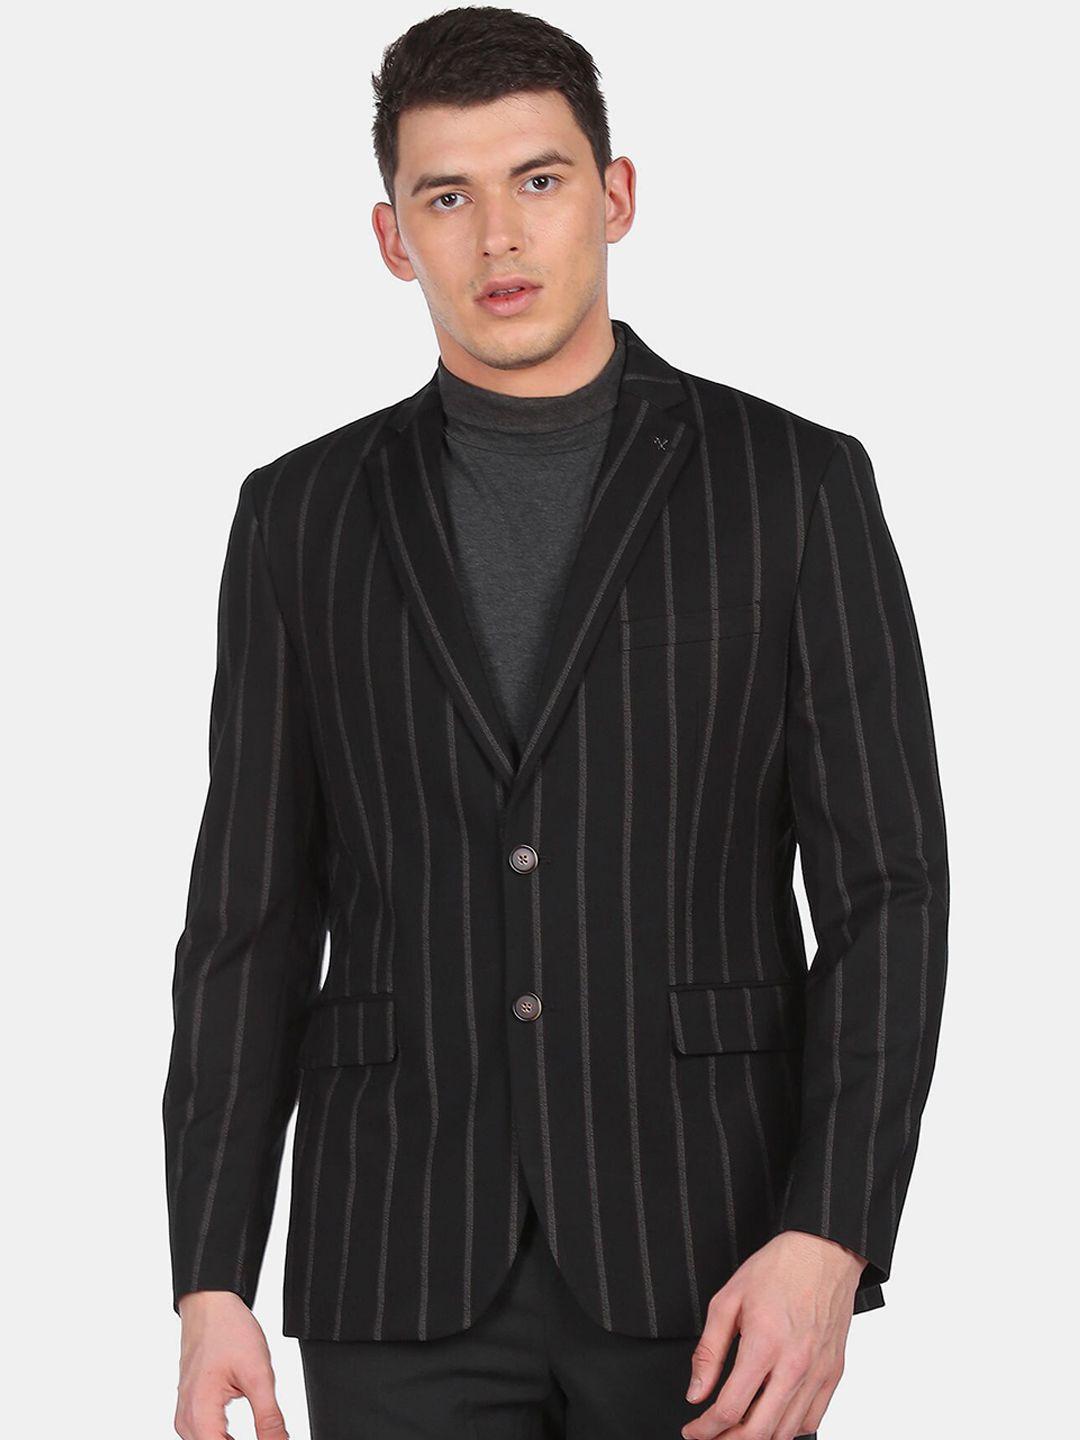 arrow-men-black-striped-slim-fit-single-breasted-formal-blazer